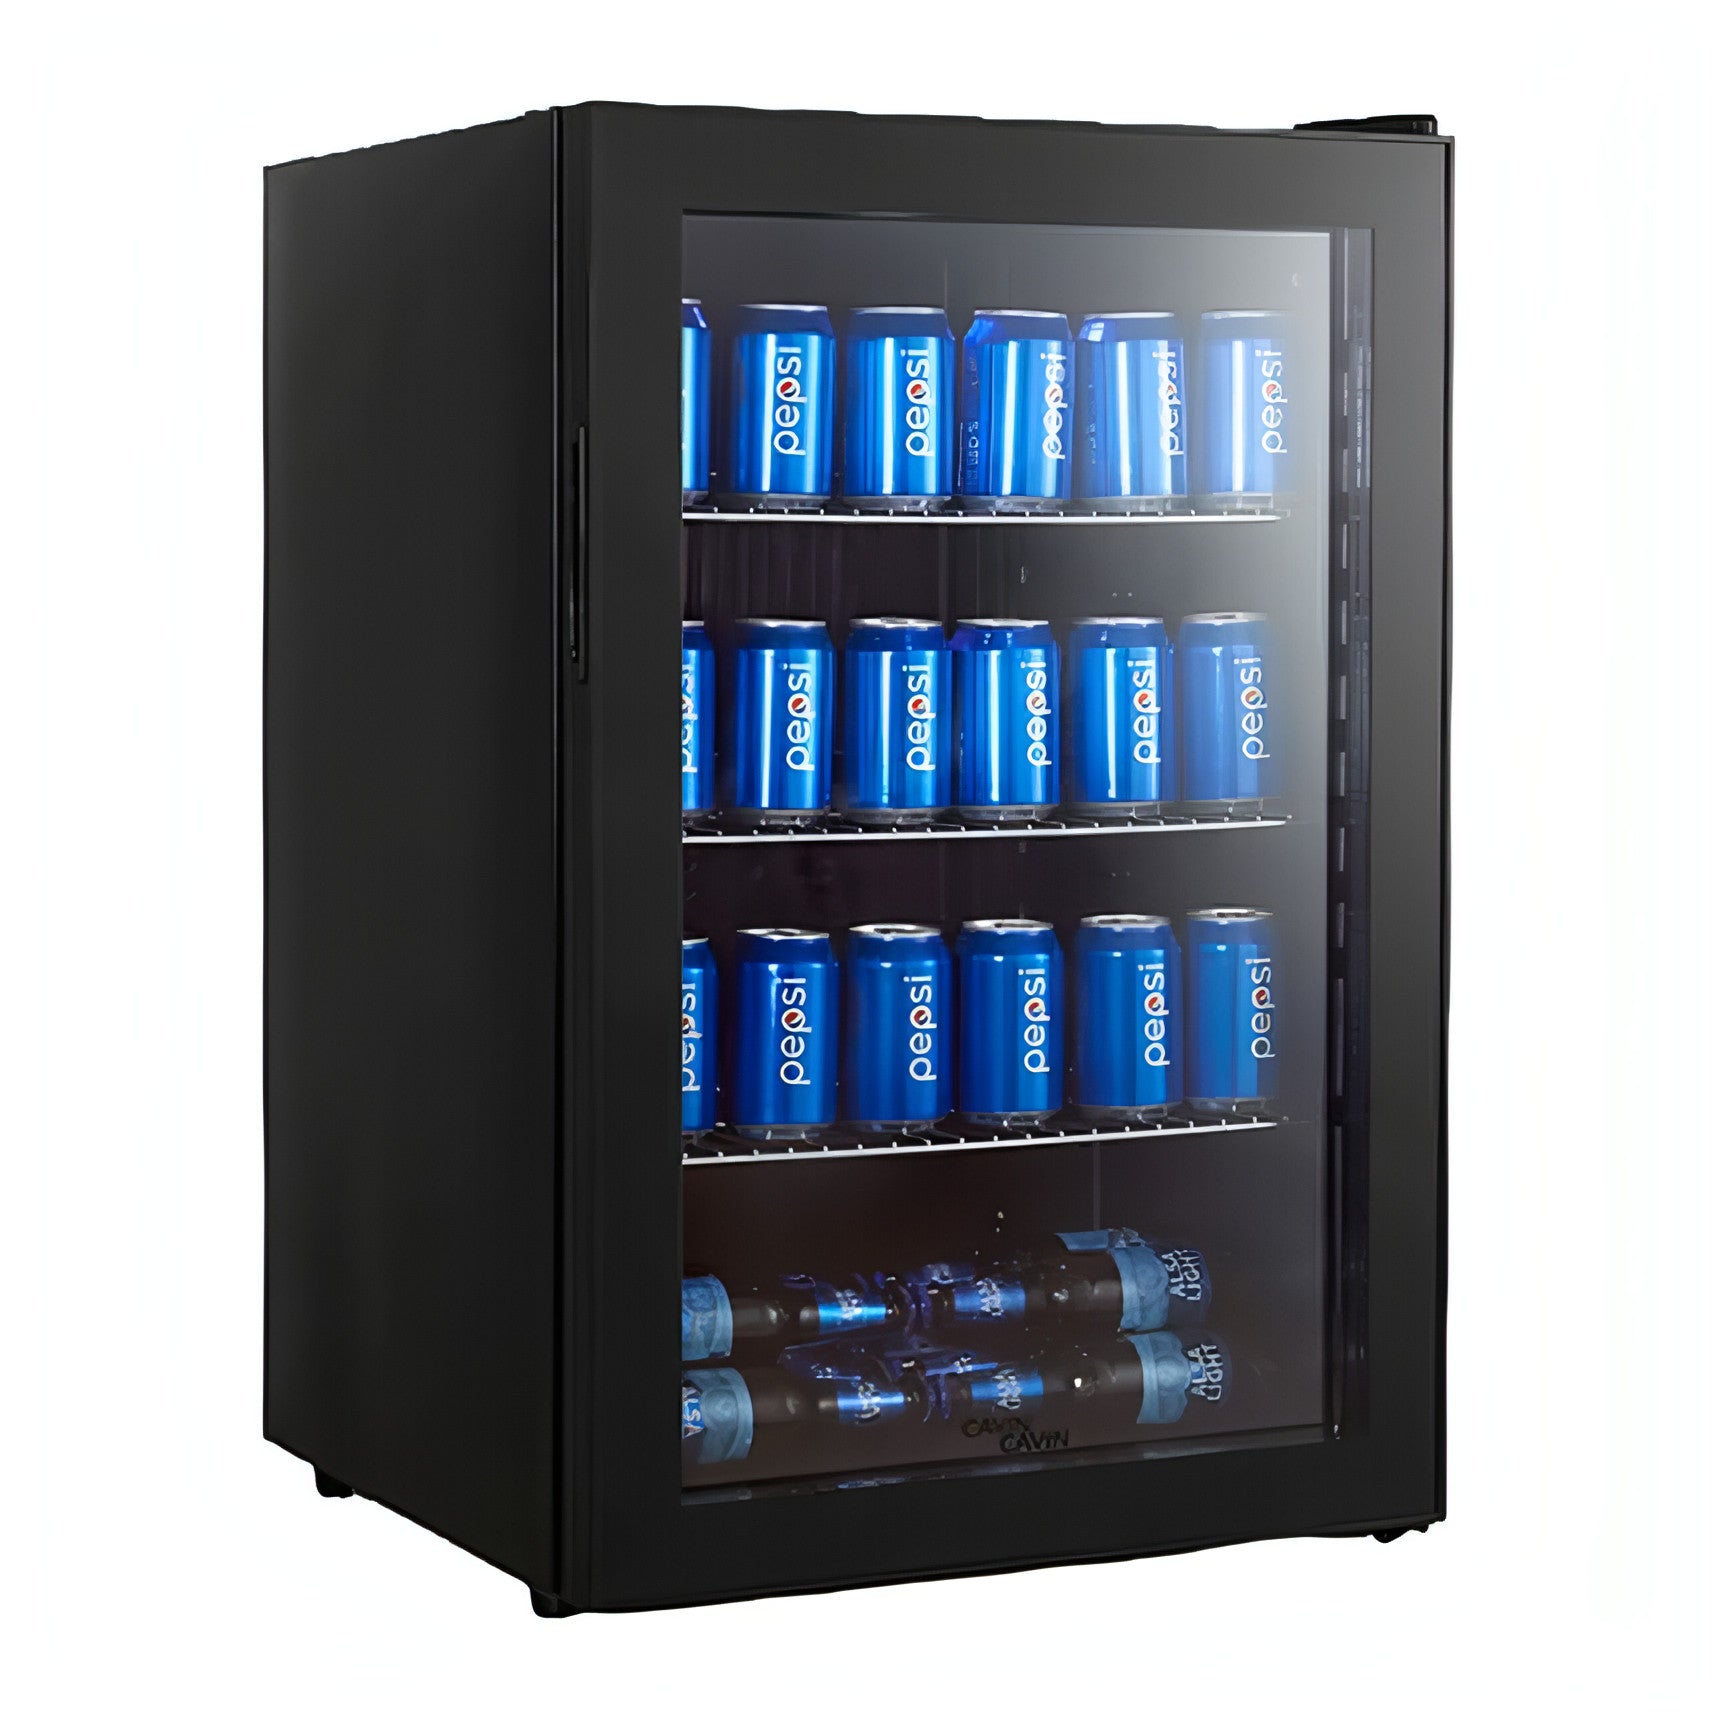 Cavin - Freestanding Beer Cooler - Northern Collection 115